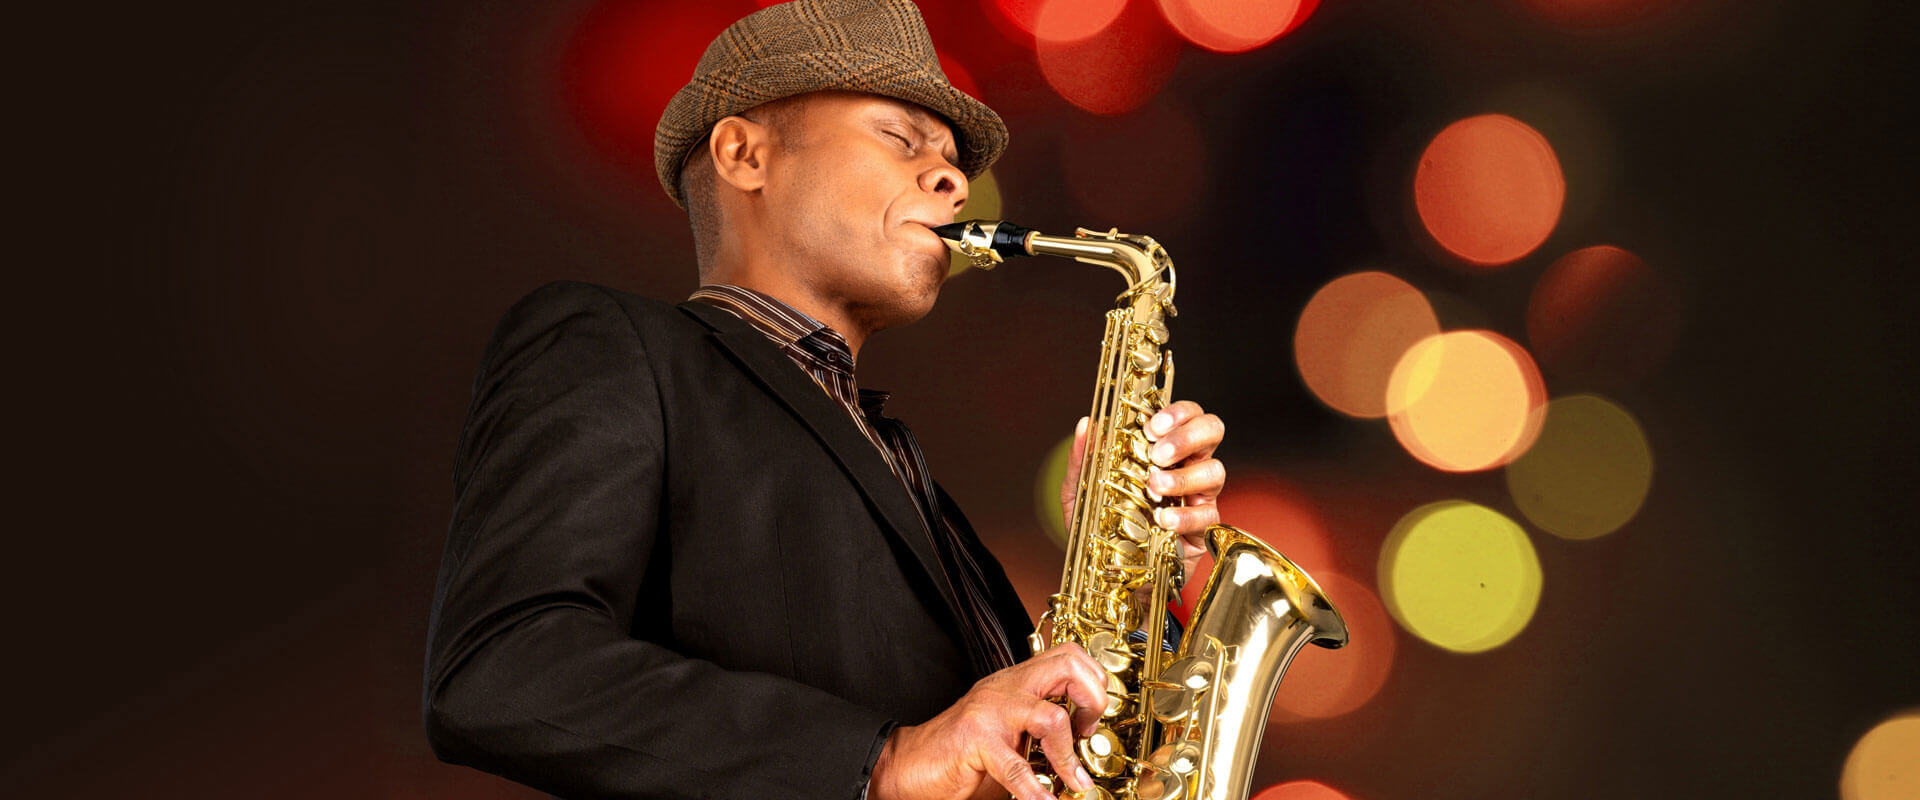 Saxophone Lessons Harwick, PA